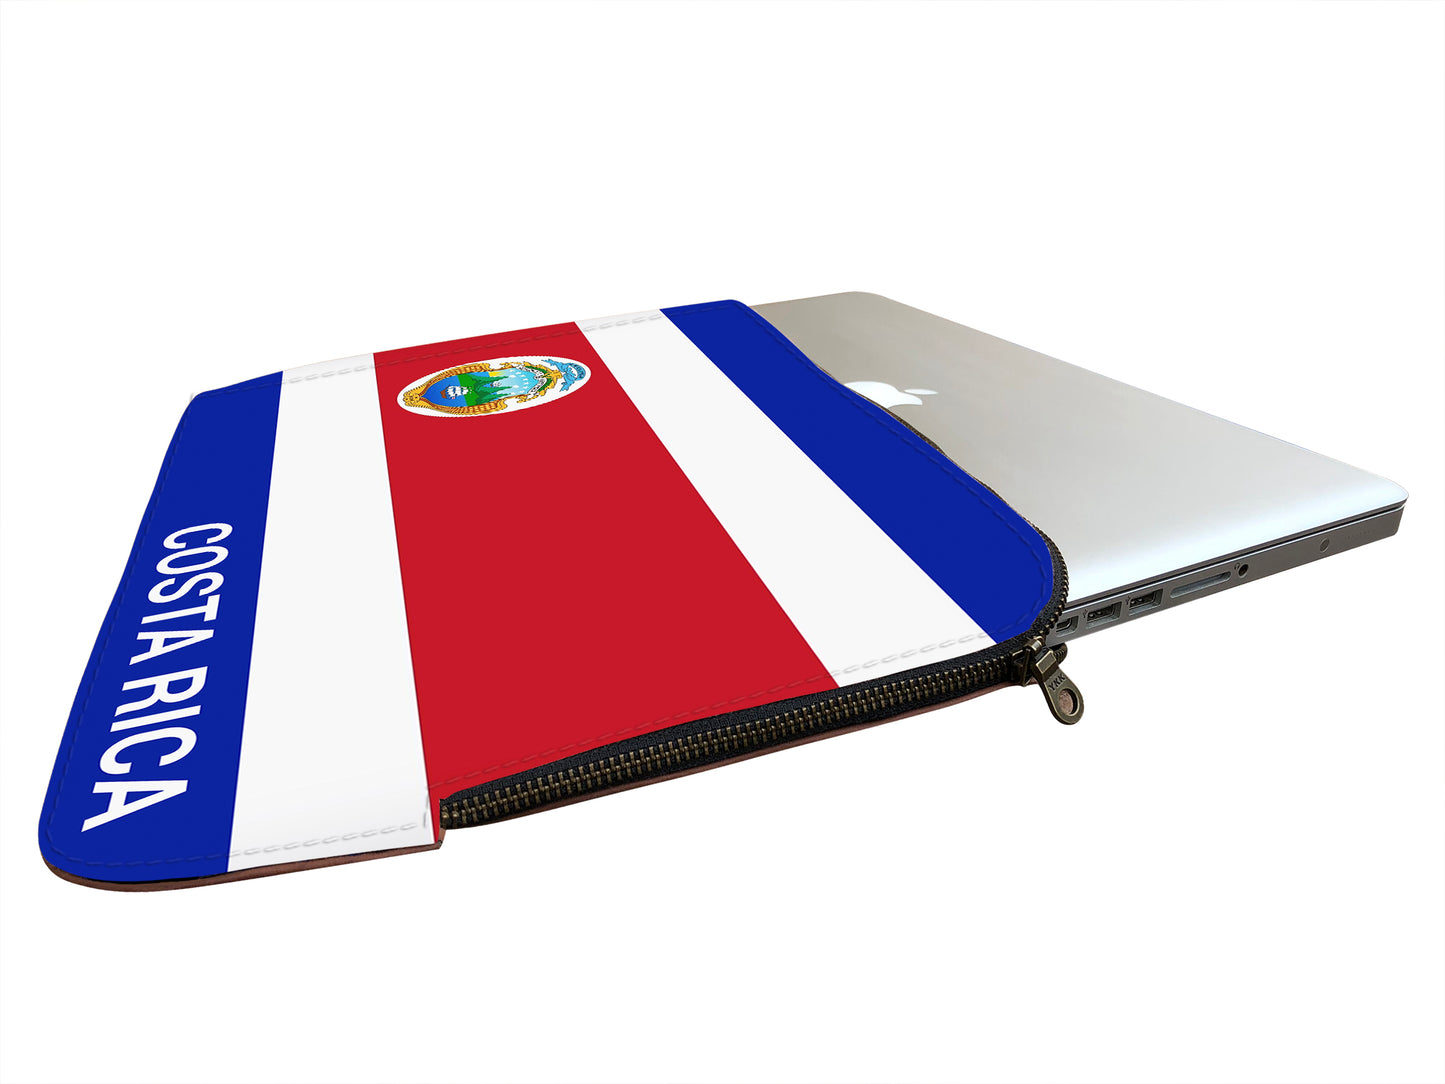 Costa Rica Laptop Sleeves | #Footballfan